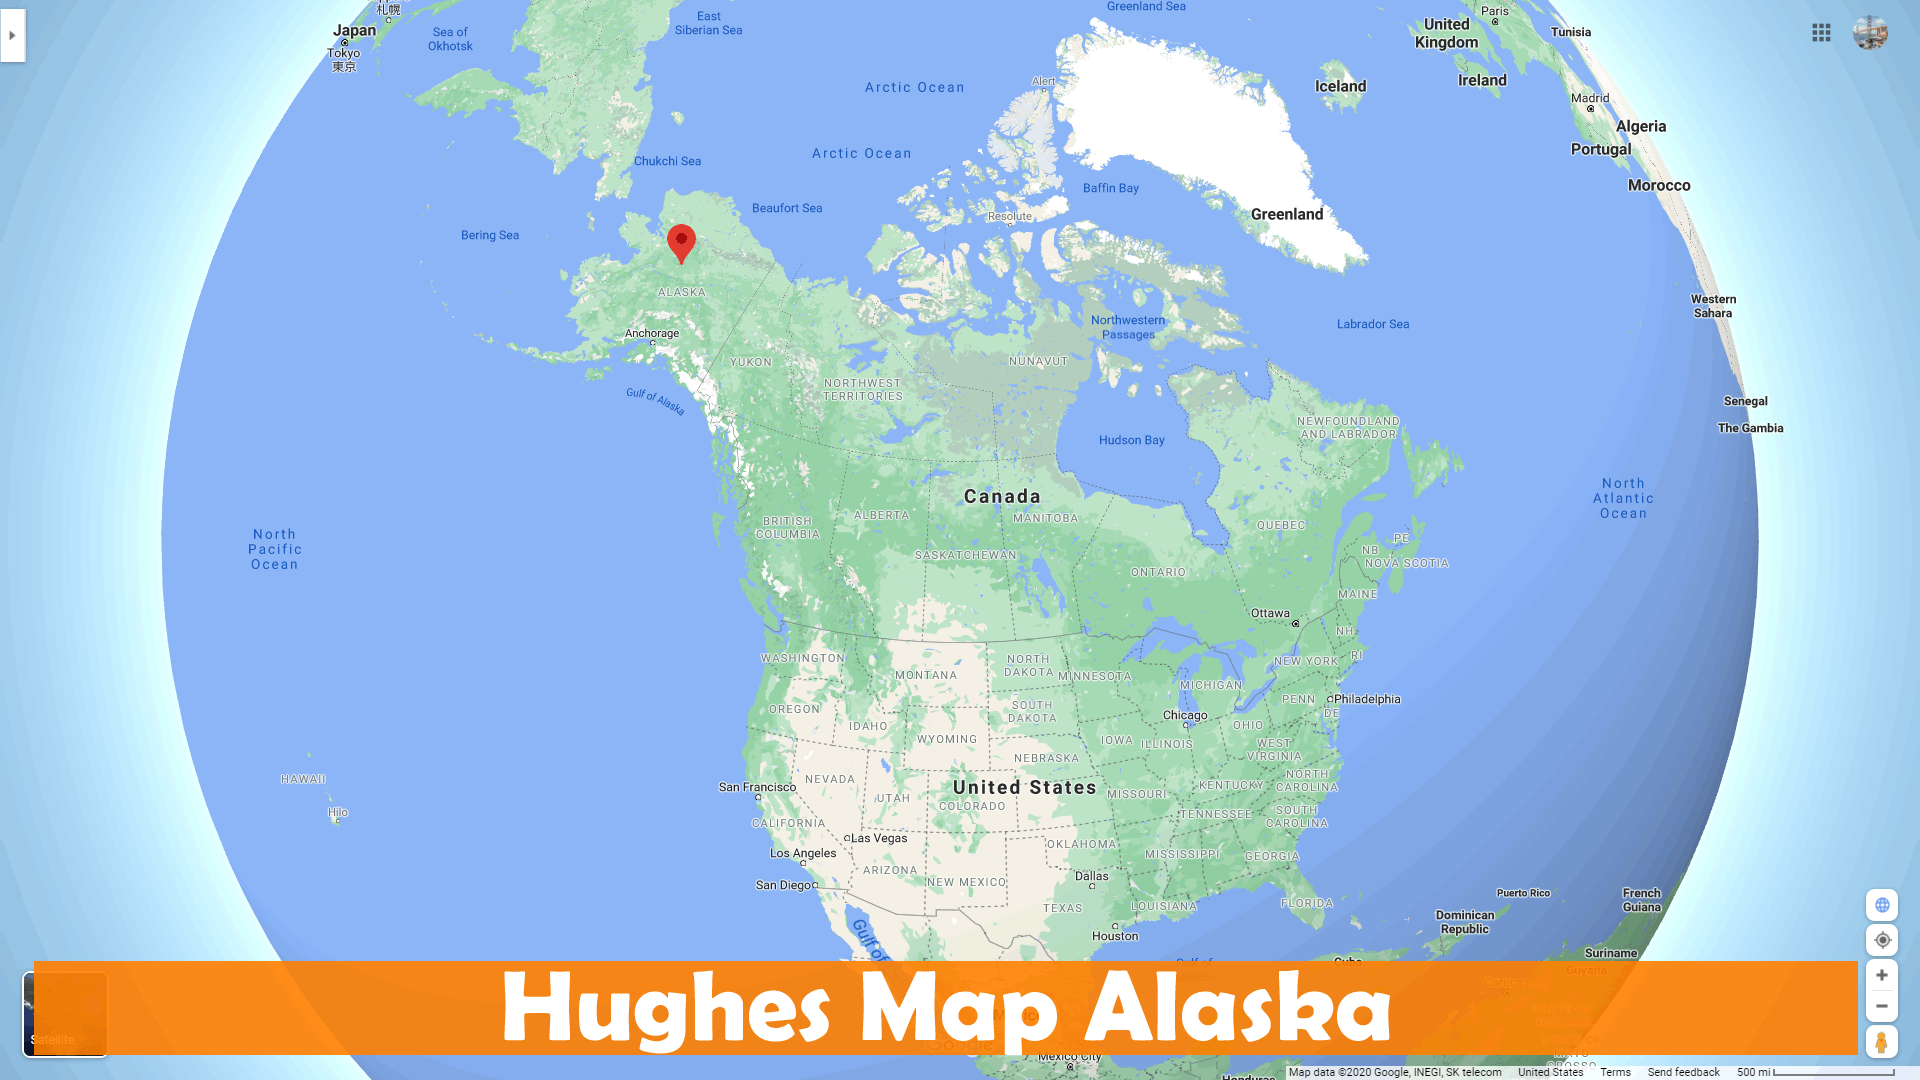 Hughes map